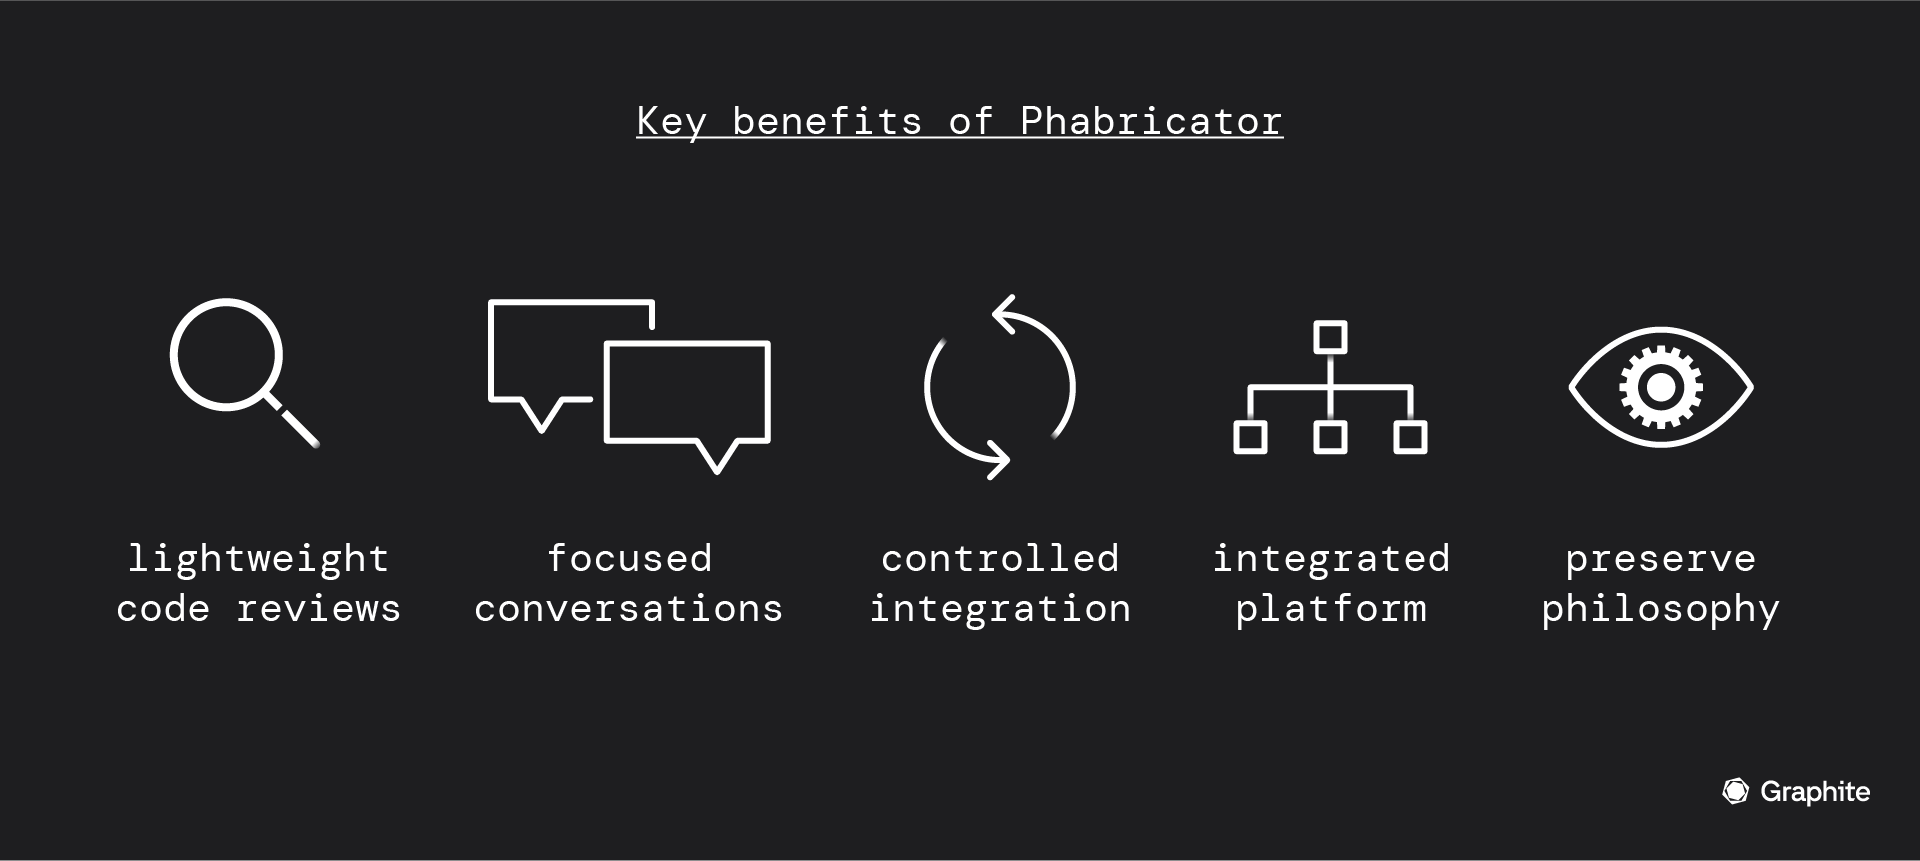 the key benefits of phabricator: lightweight code reviews, focused conversations, controlled integration, integrated platform, preserve philosophy